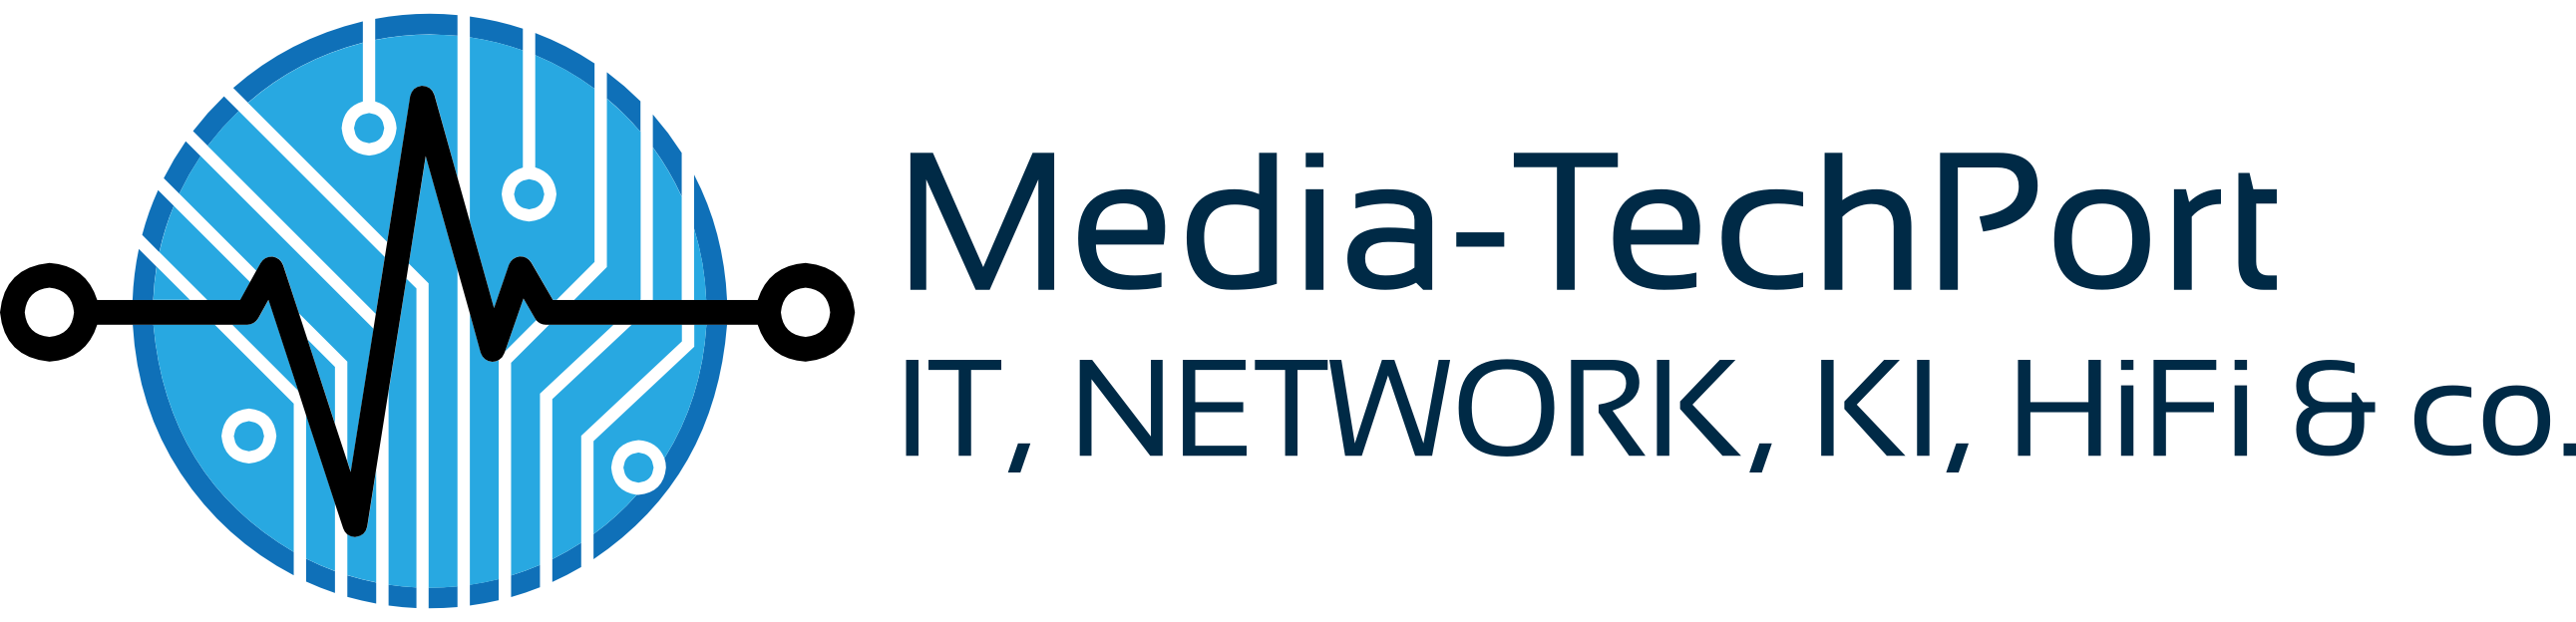 Media-Techport Support